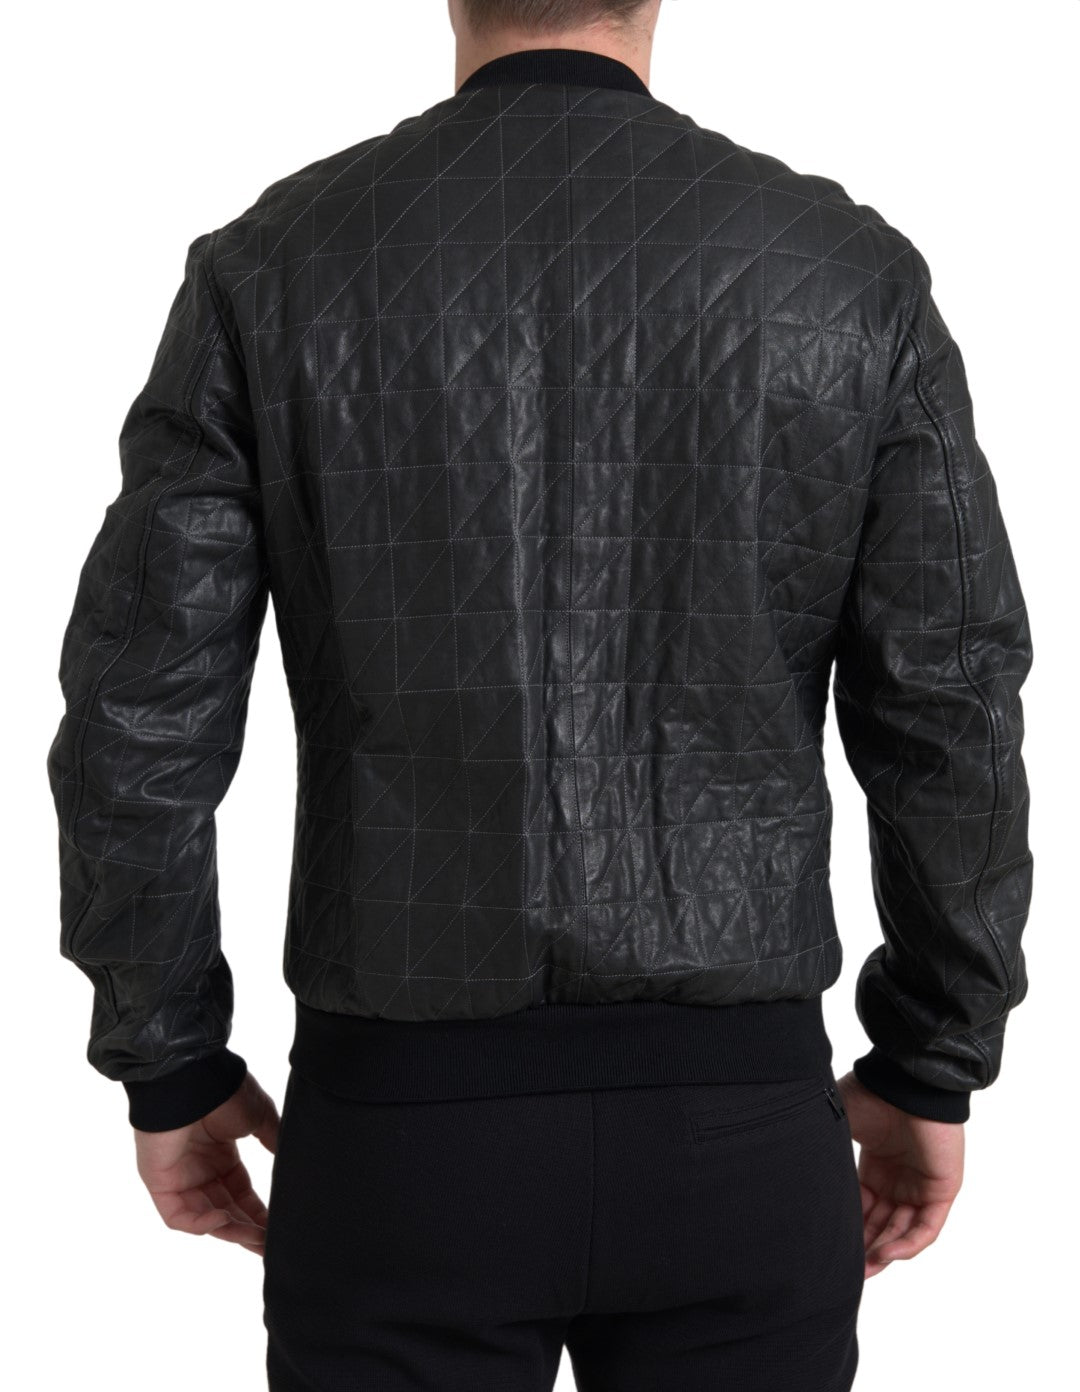 Black Leather Full Zip Bomber Coat Jacket